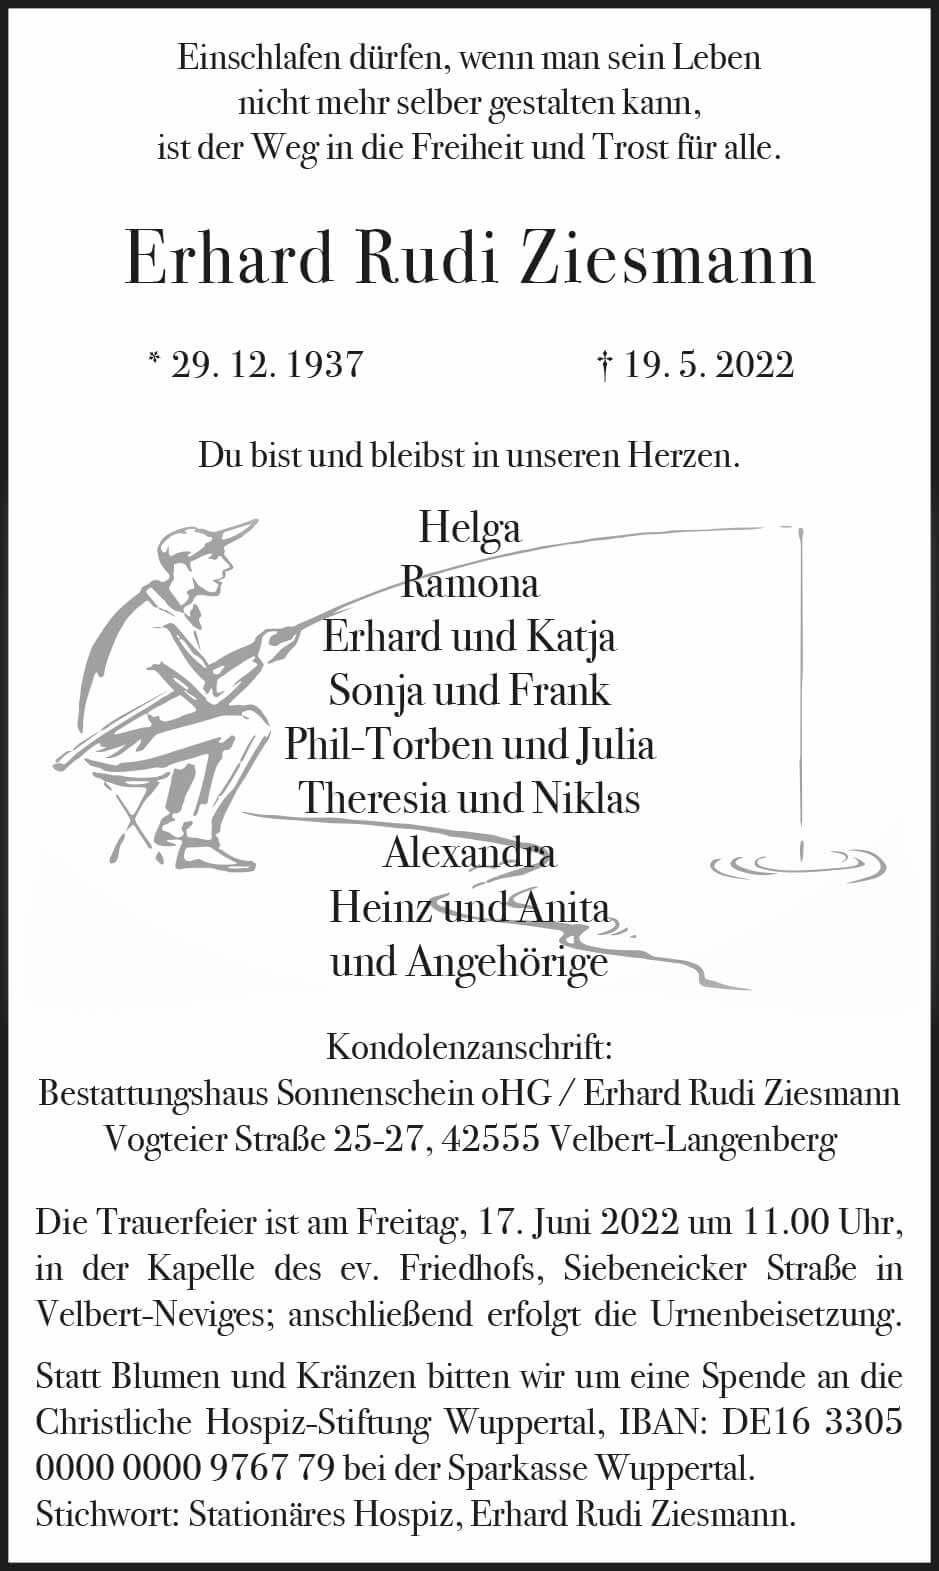 Erhard Rudi Ziesmann † 19. 5. 2022